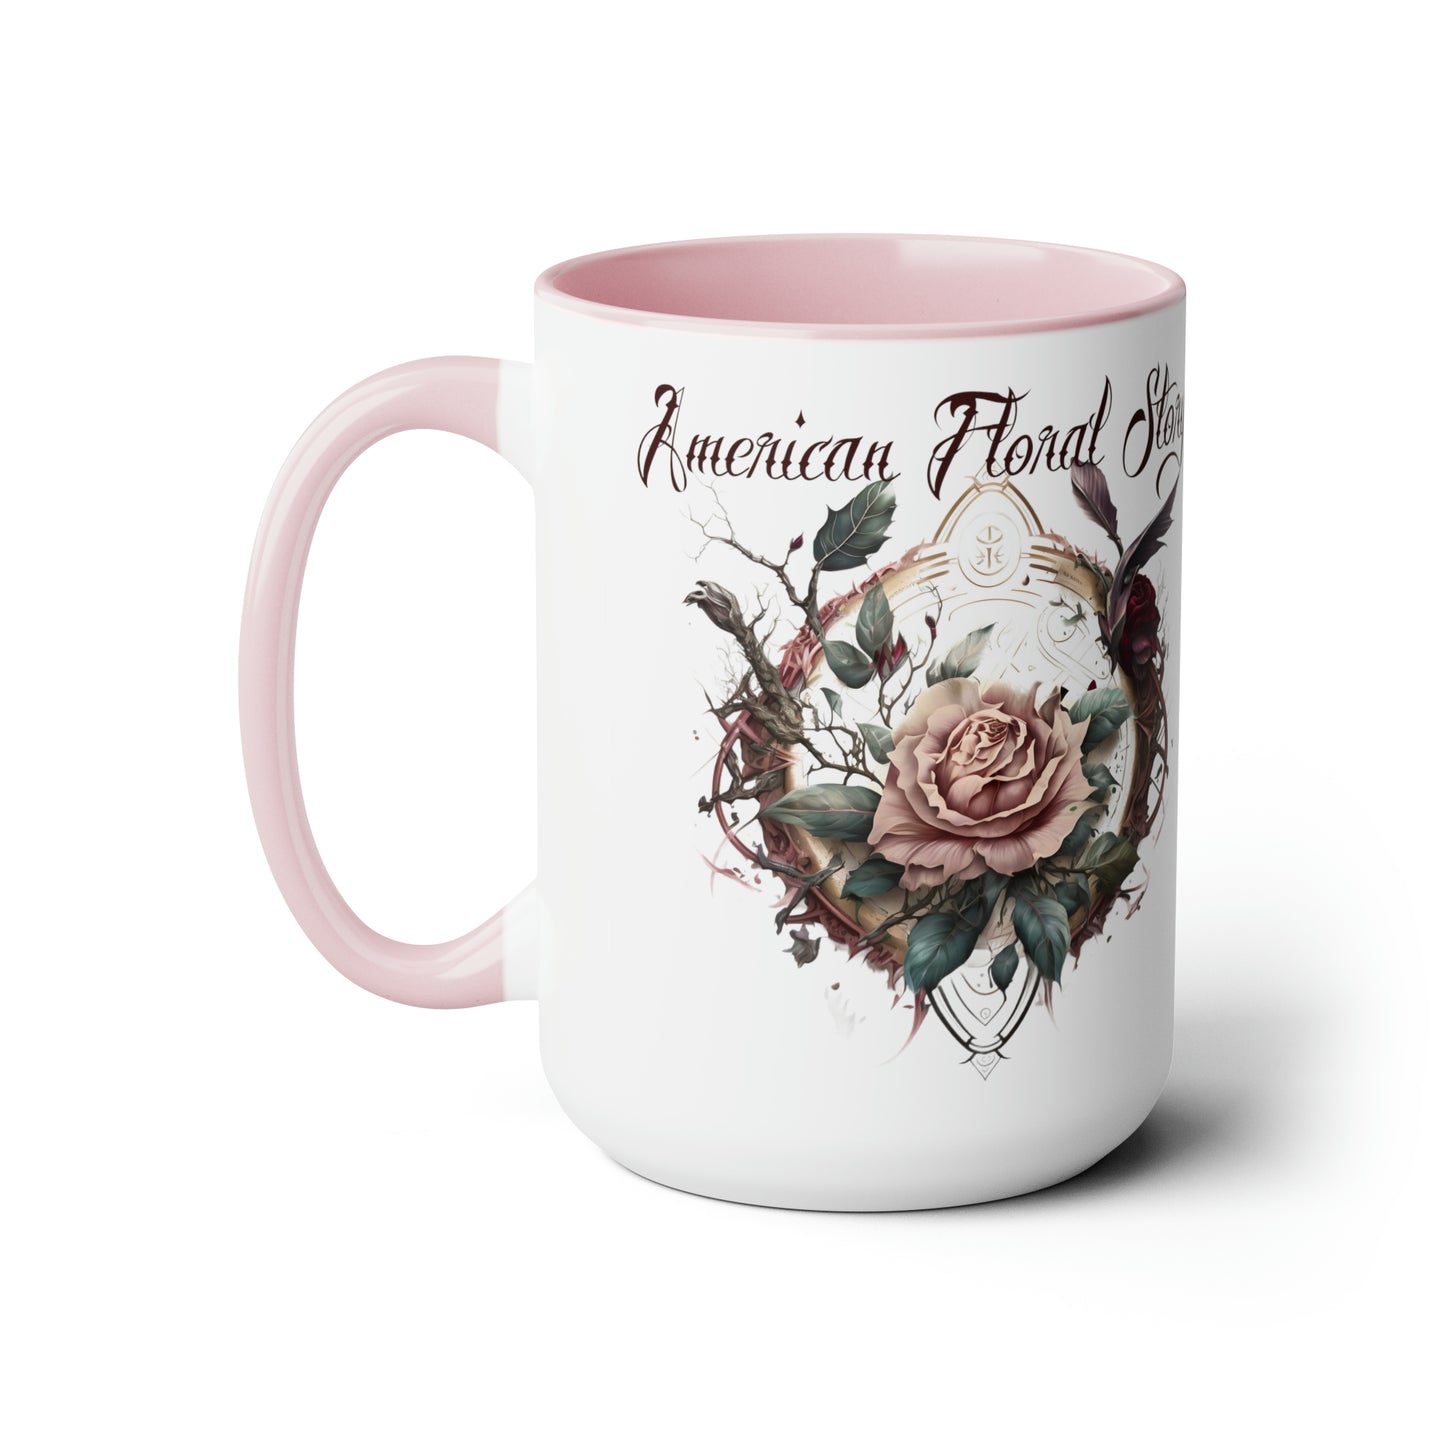 american floral story - 15oz graphic mug